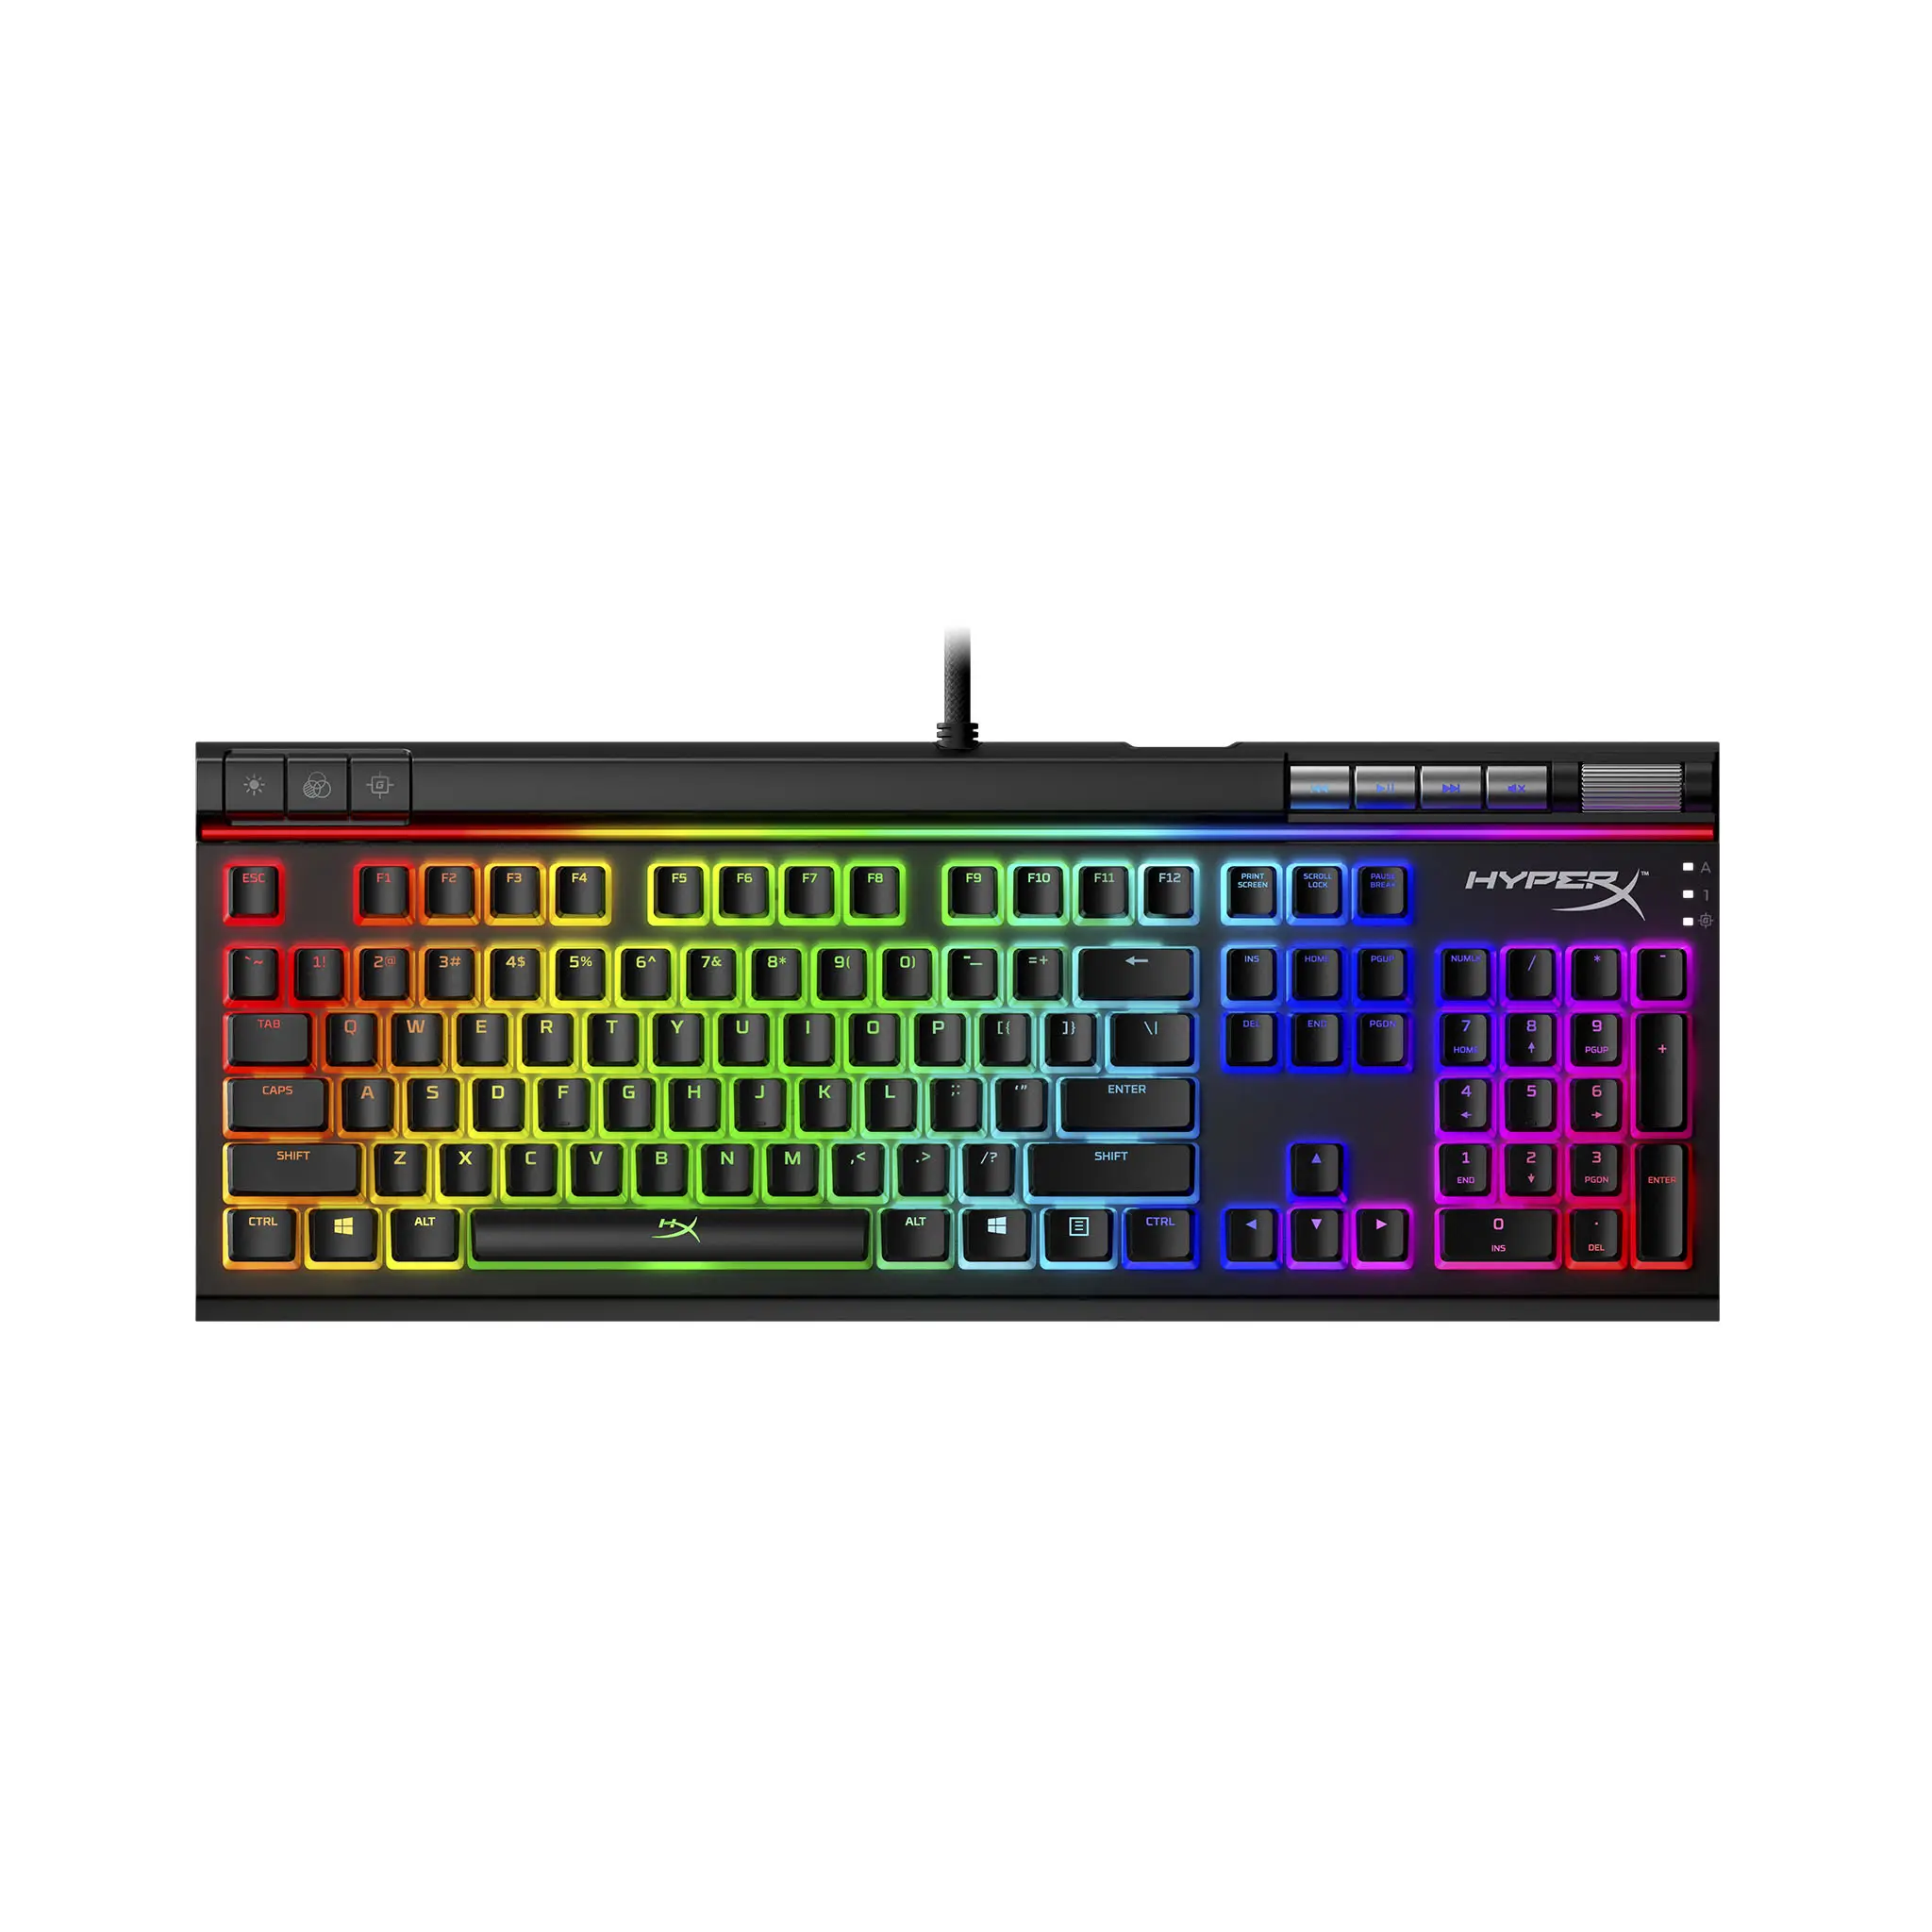 Hyper X Alloy Elite 2 ABS Pudding Keycaps RGB Mechanical Gaming Keyboard Media Controls Gaming Keyboard